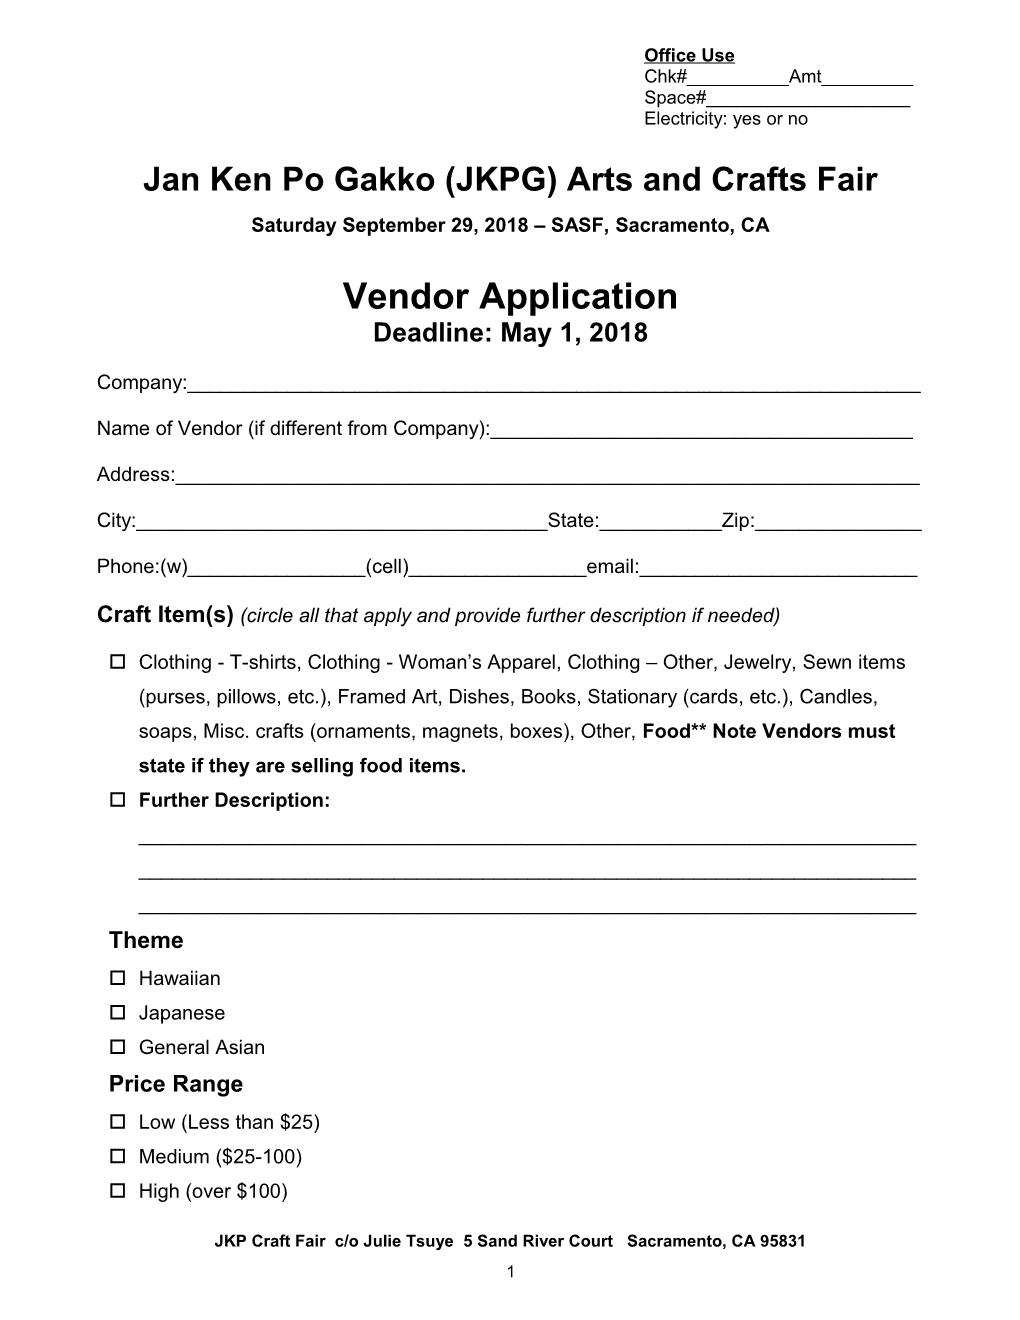 Jan Ken Po Gakko Arts and Crafts Fair